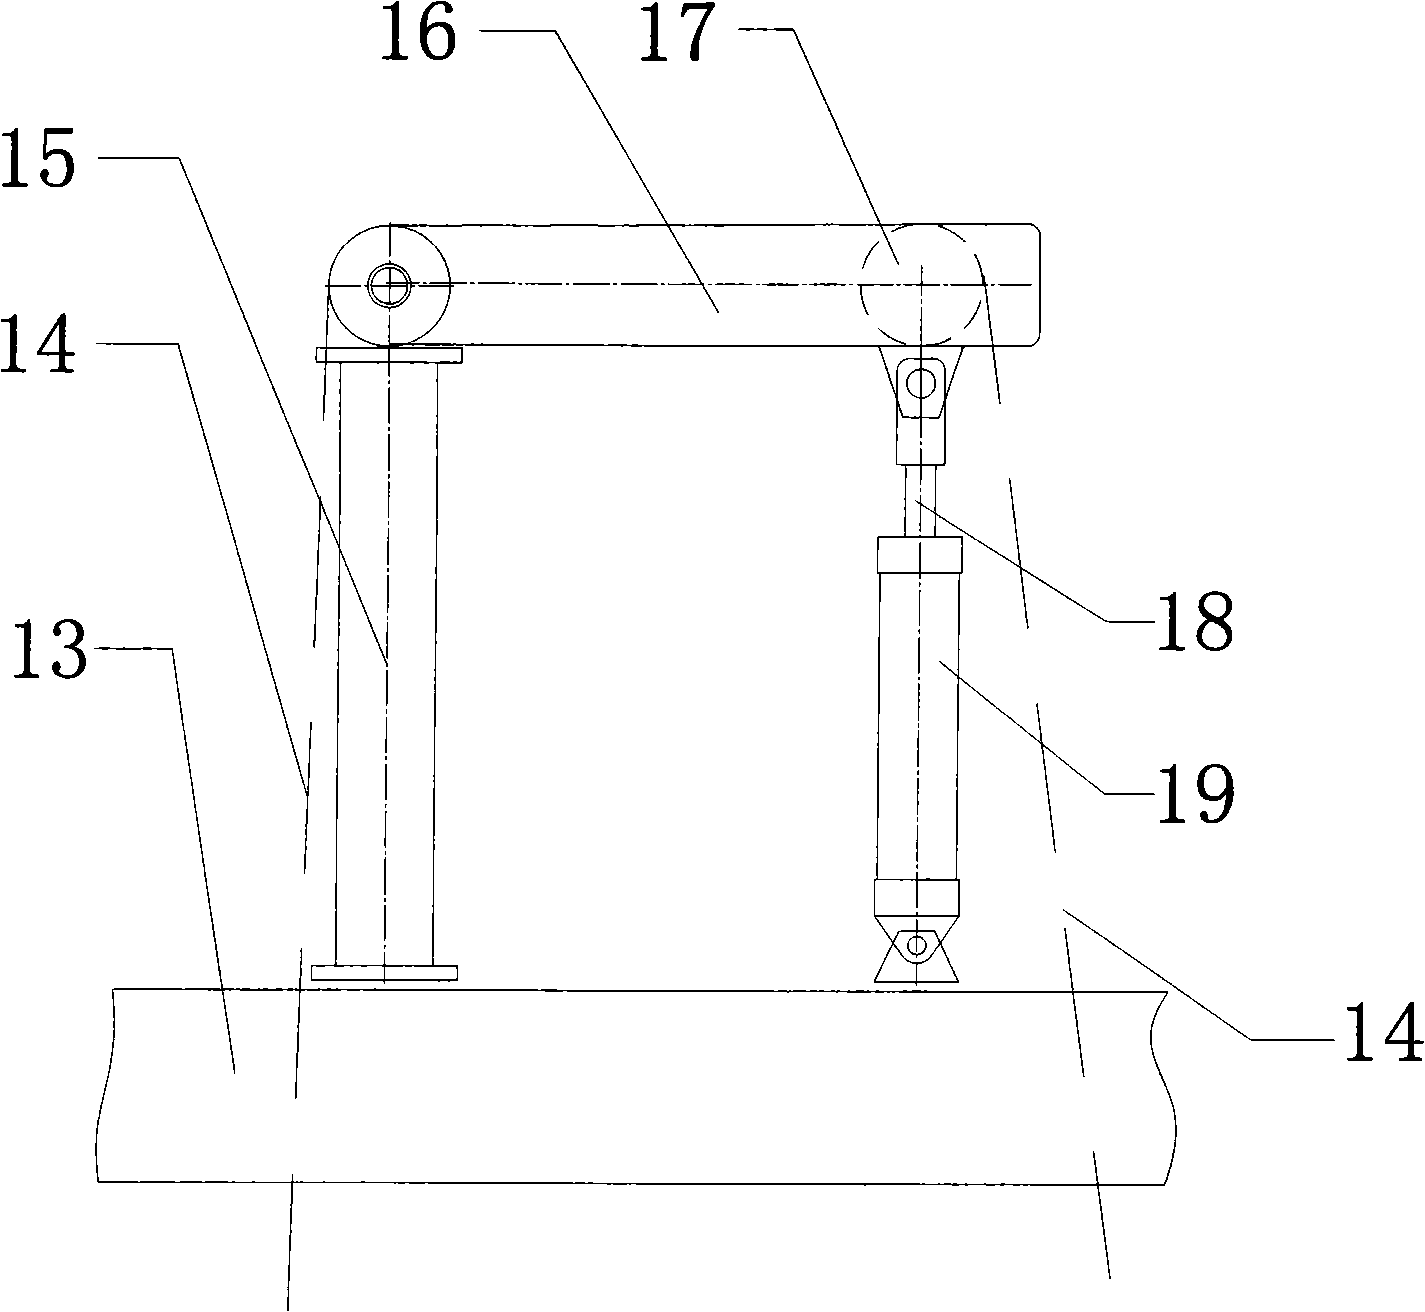 Production method of cloth coating